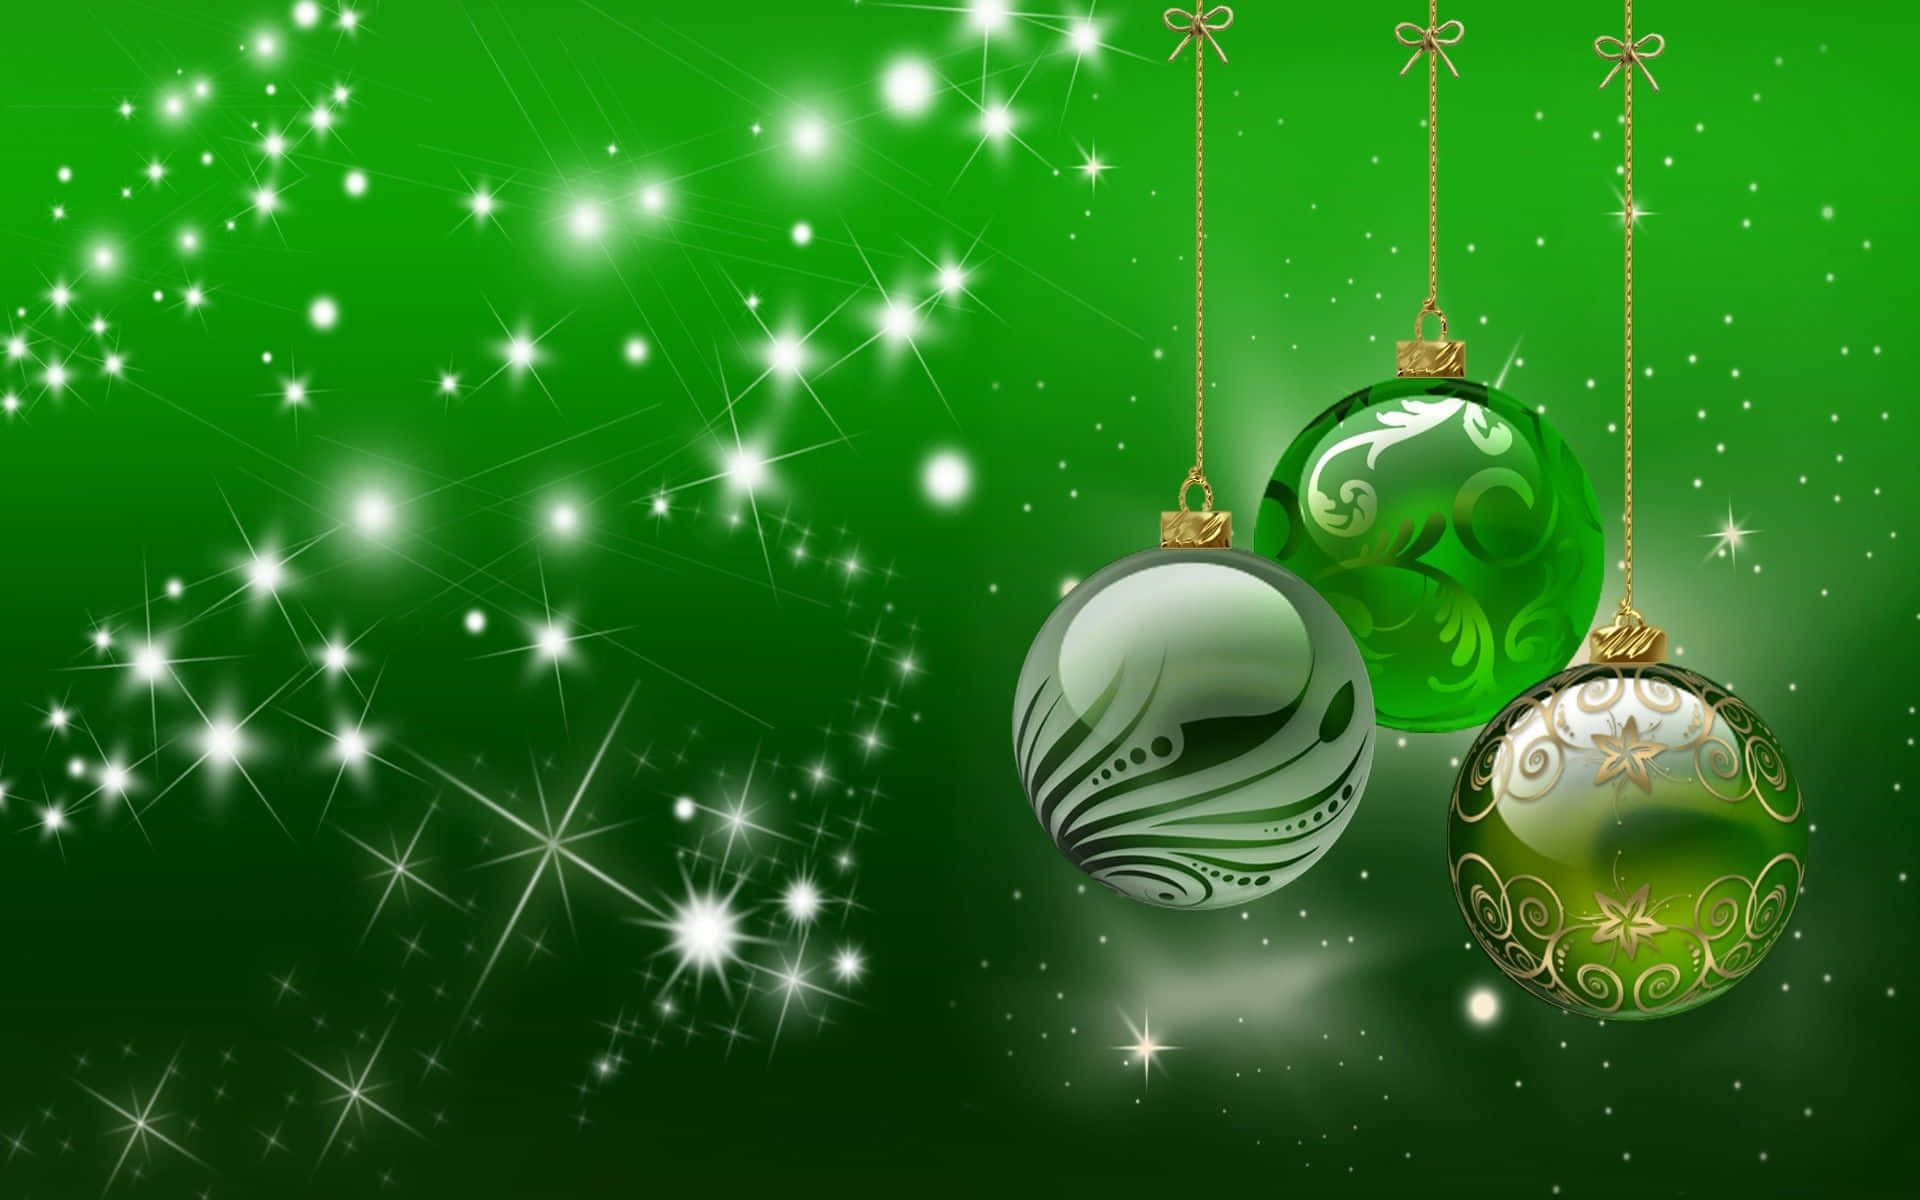 Harmonious Green Christmas Picture Wallpaper